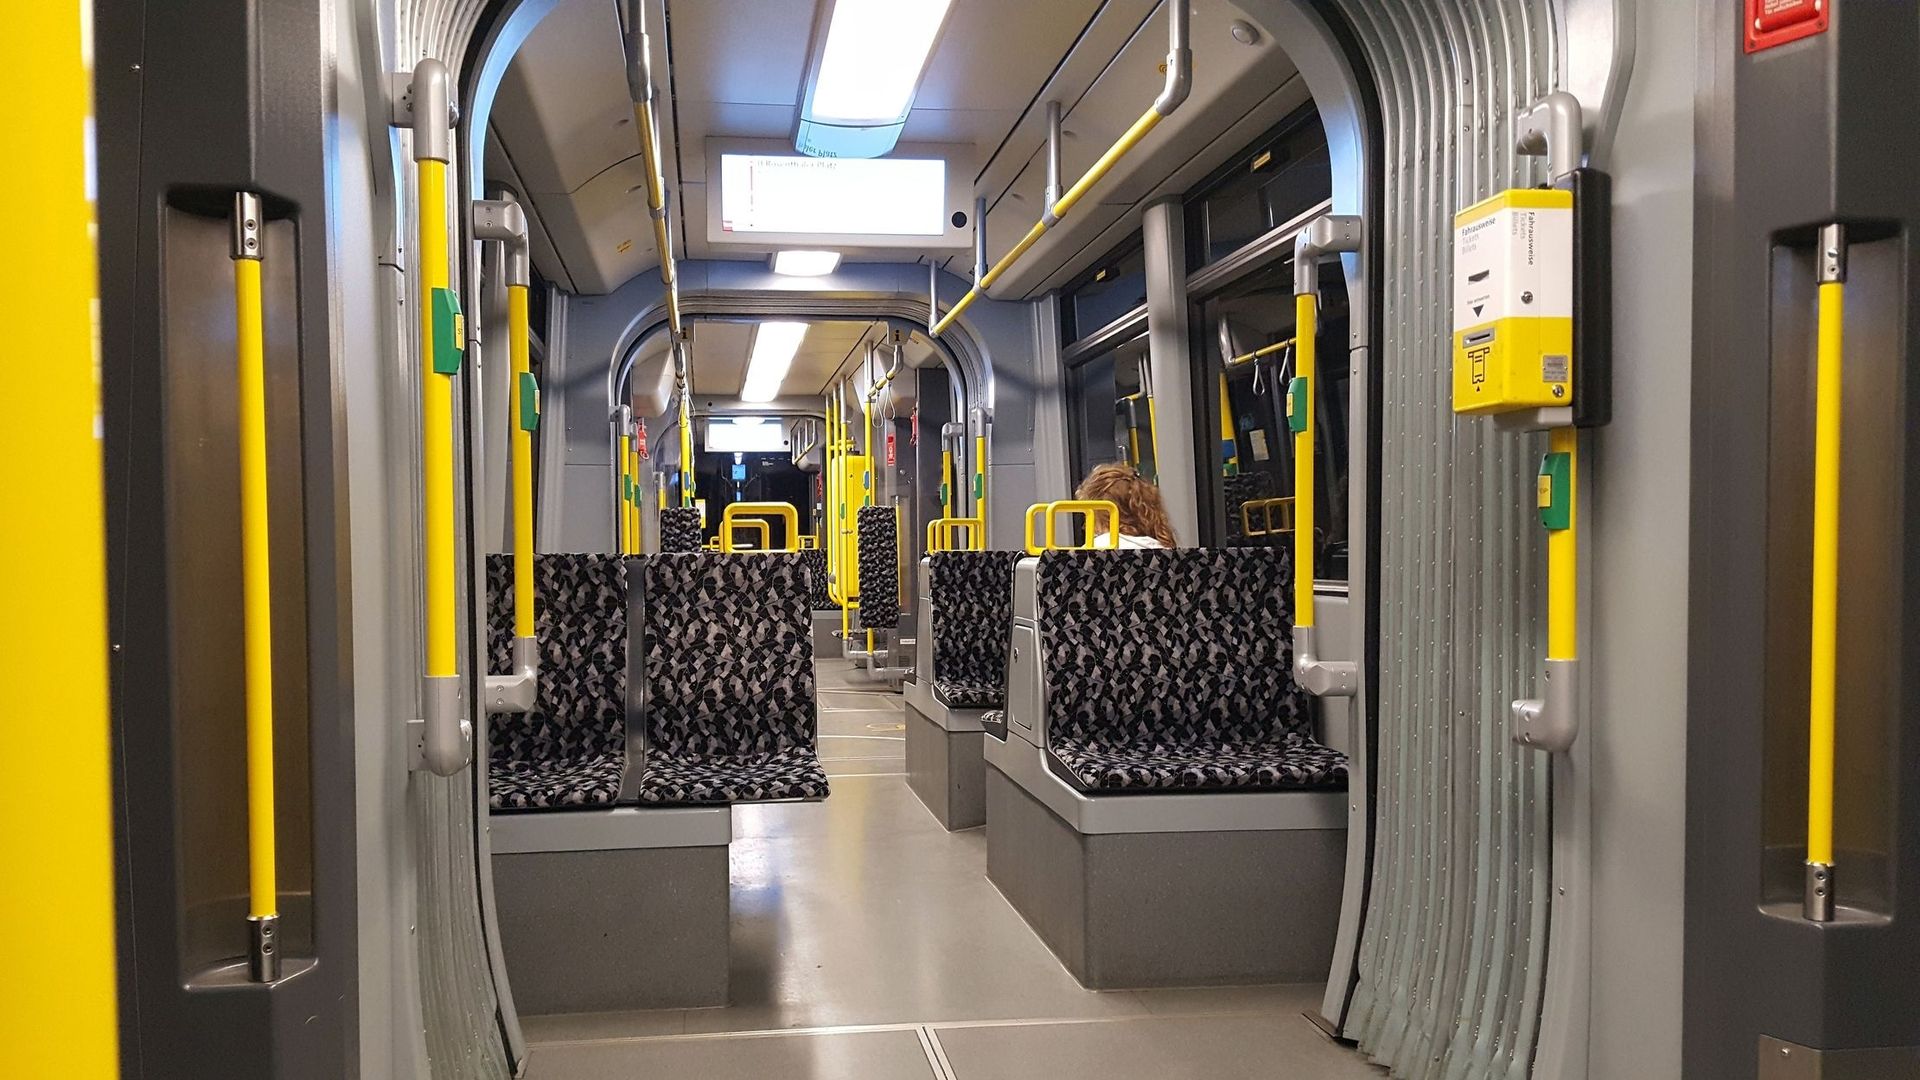  Des sièges de métro transformés en chaussons.